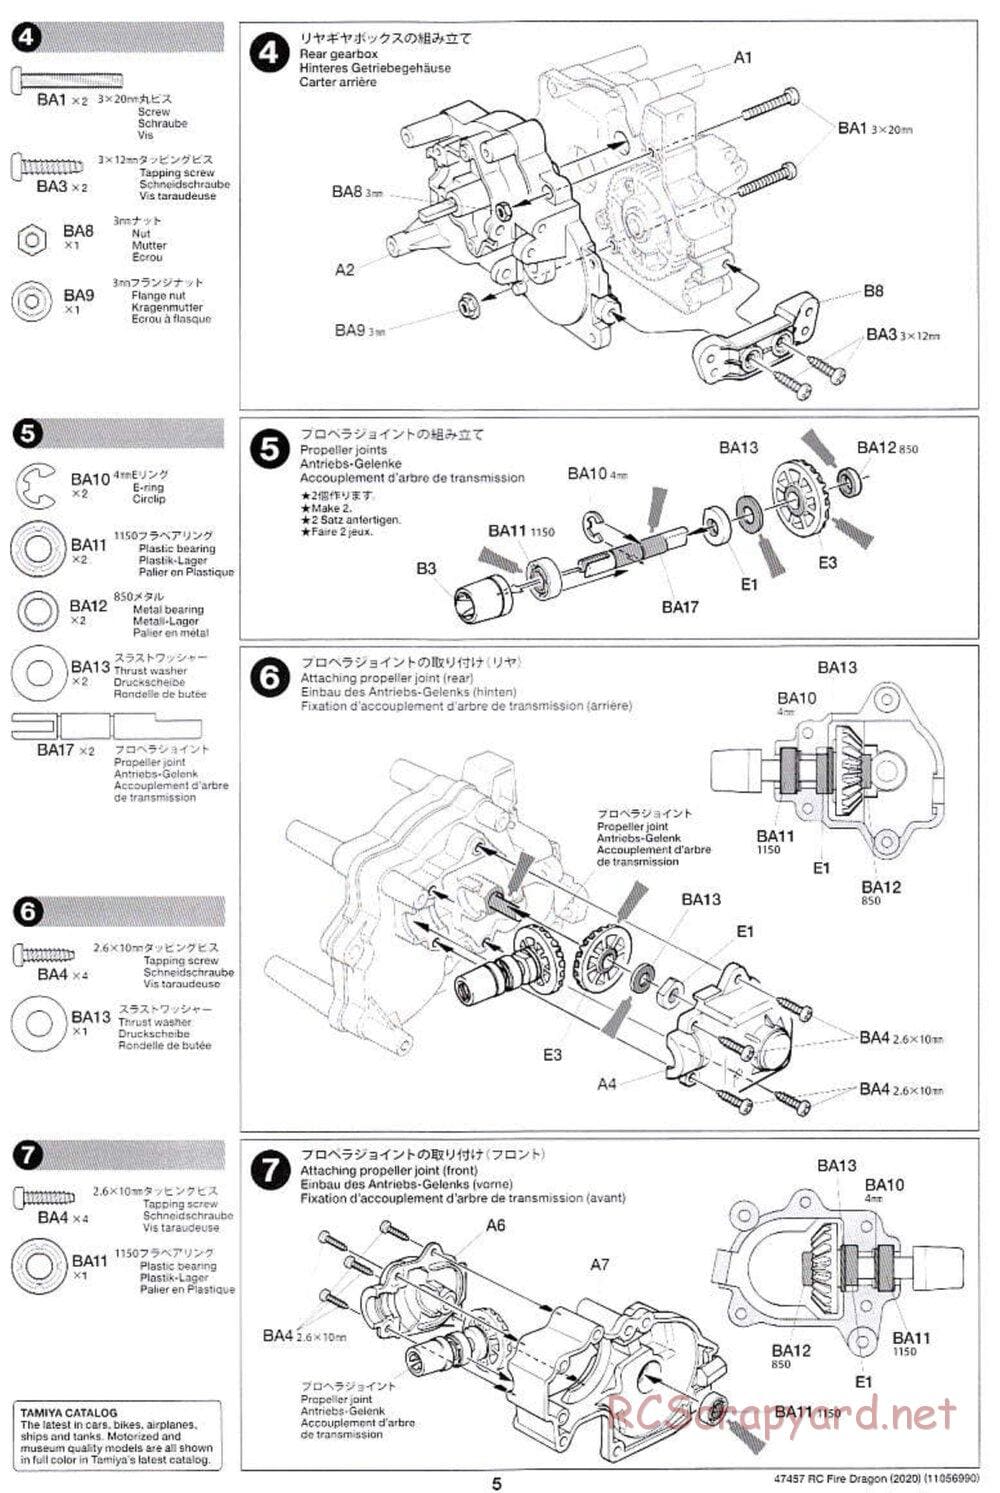 Tamiya - Fire Dragon (2020) Chassis - Manual - Page 5